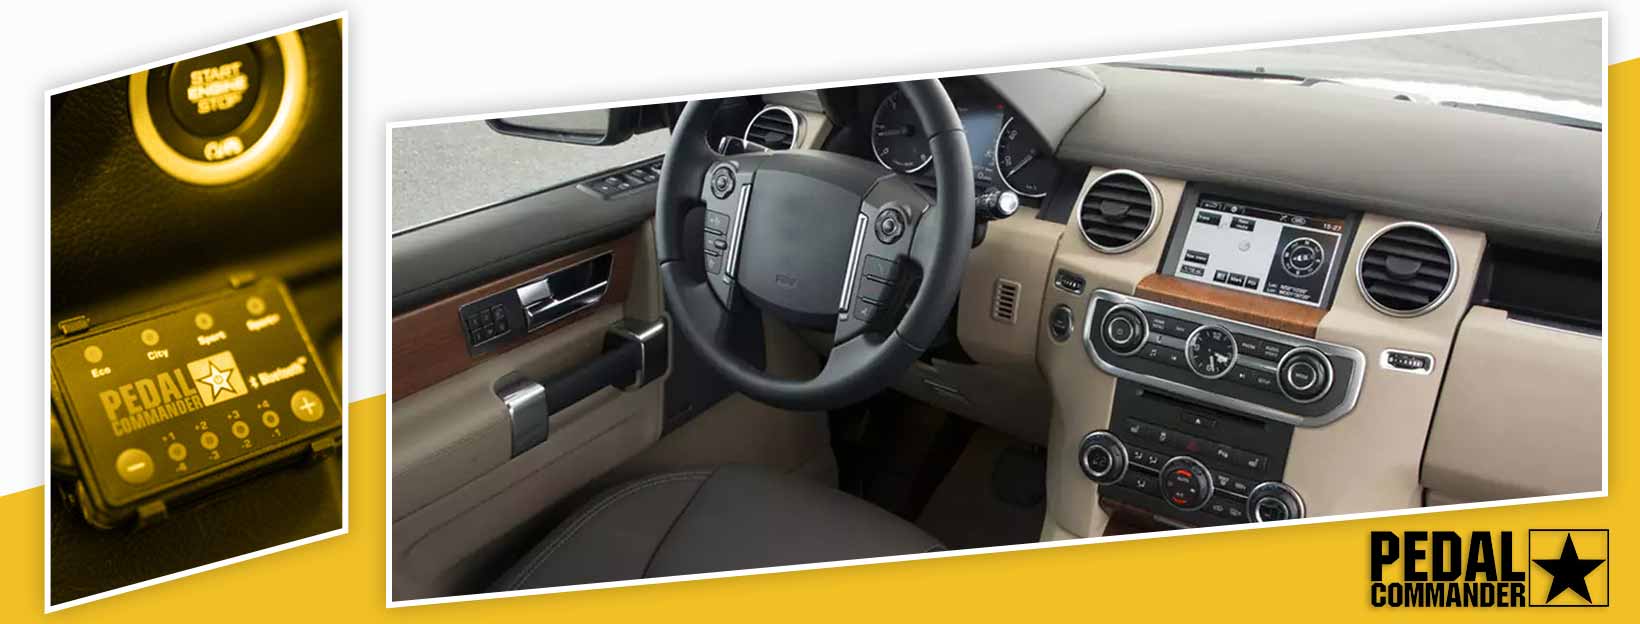 Pedal Commander for Land Rover LR3 - interior